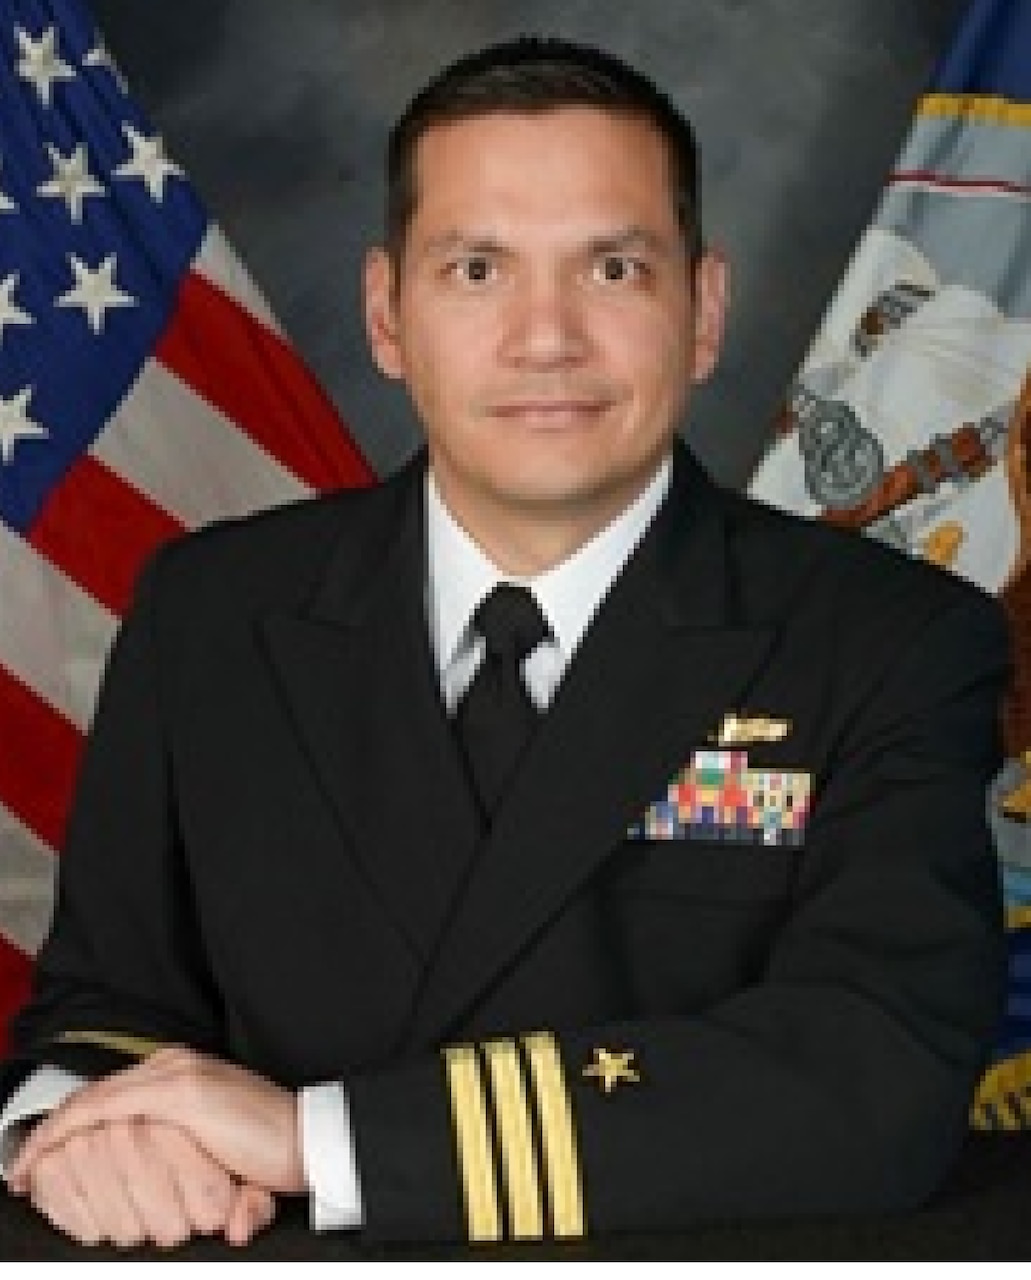 Commander James Martello